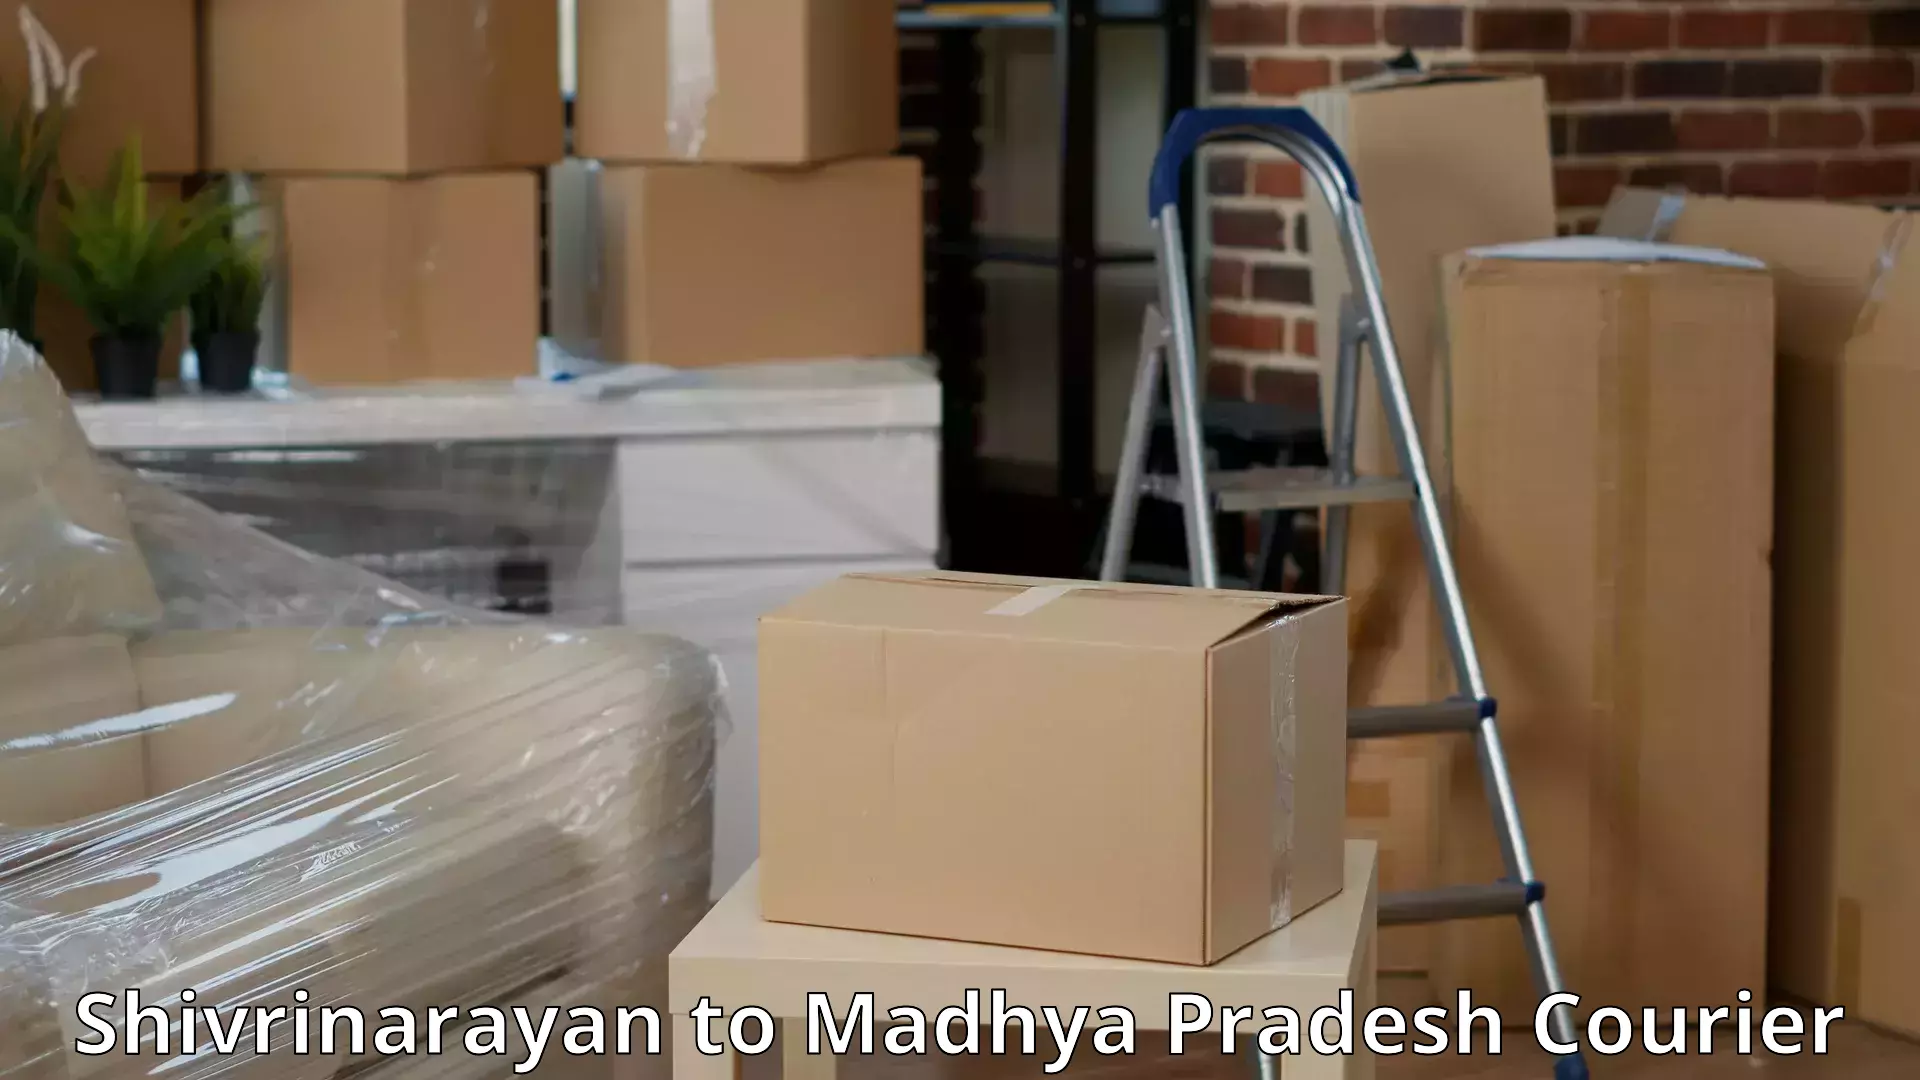 Quality moving company in Shivrinarayan to Madhya Pradesh